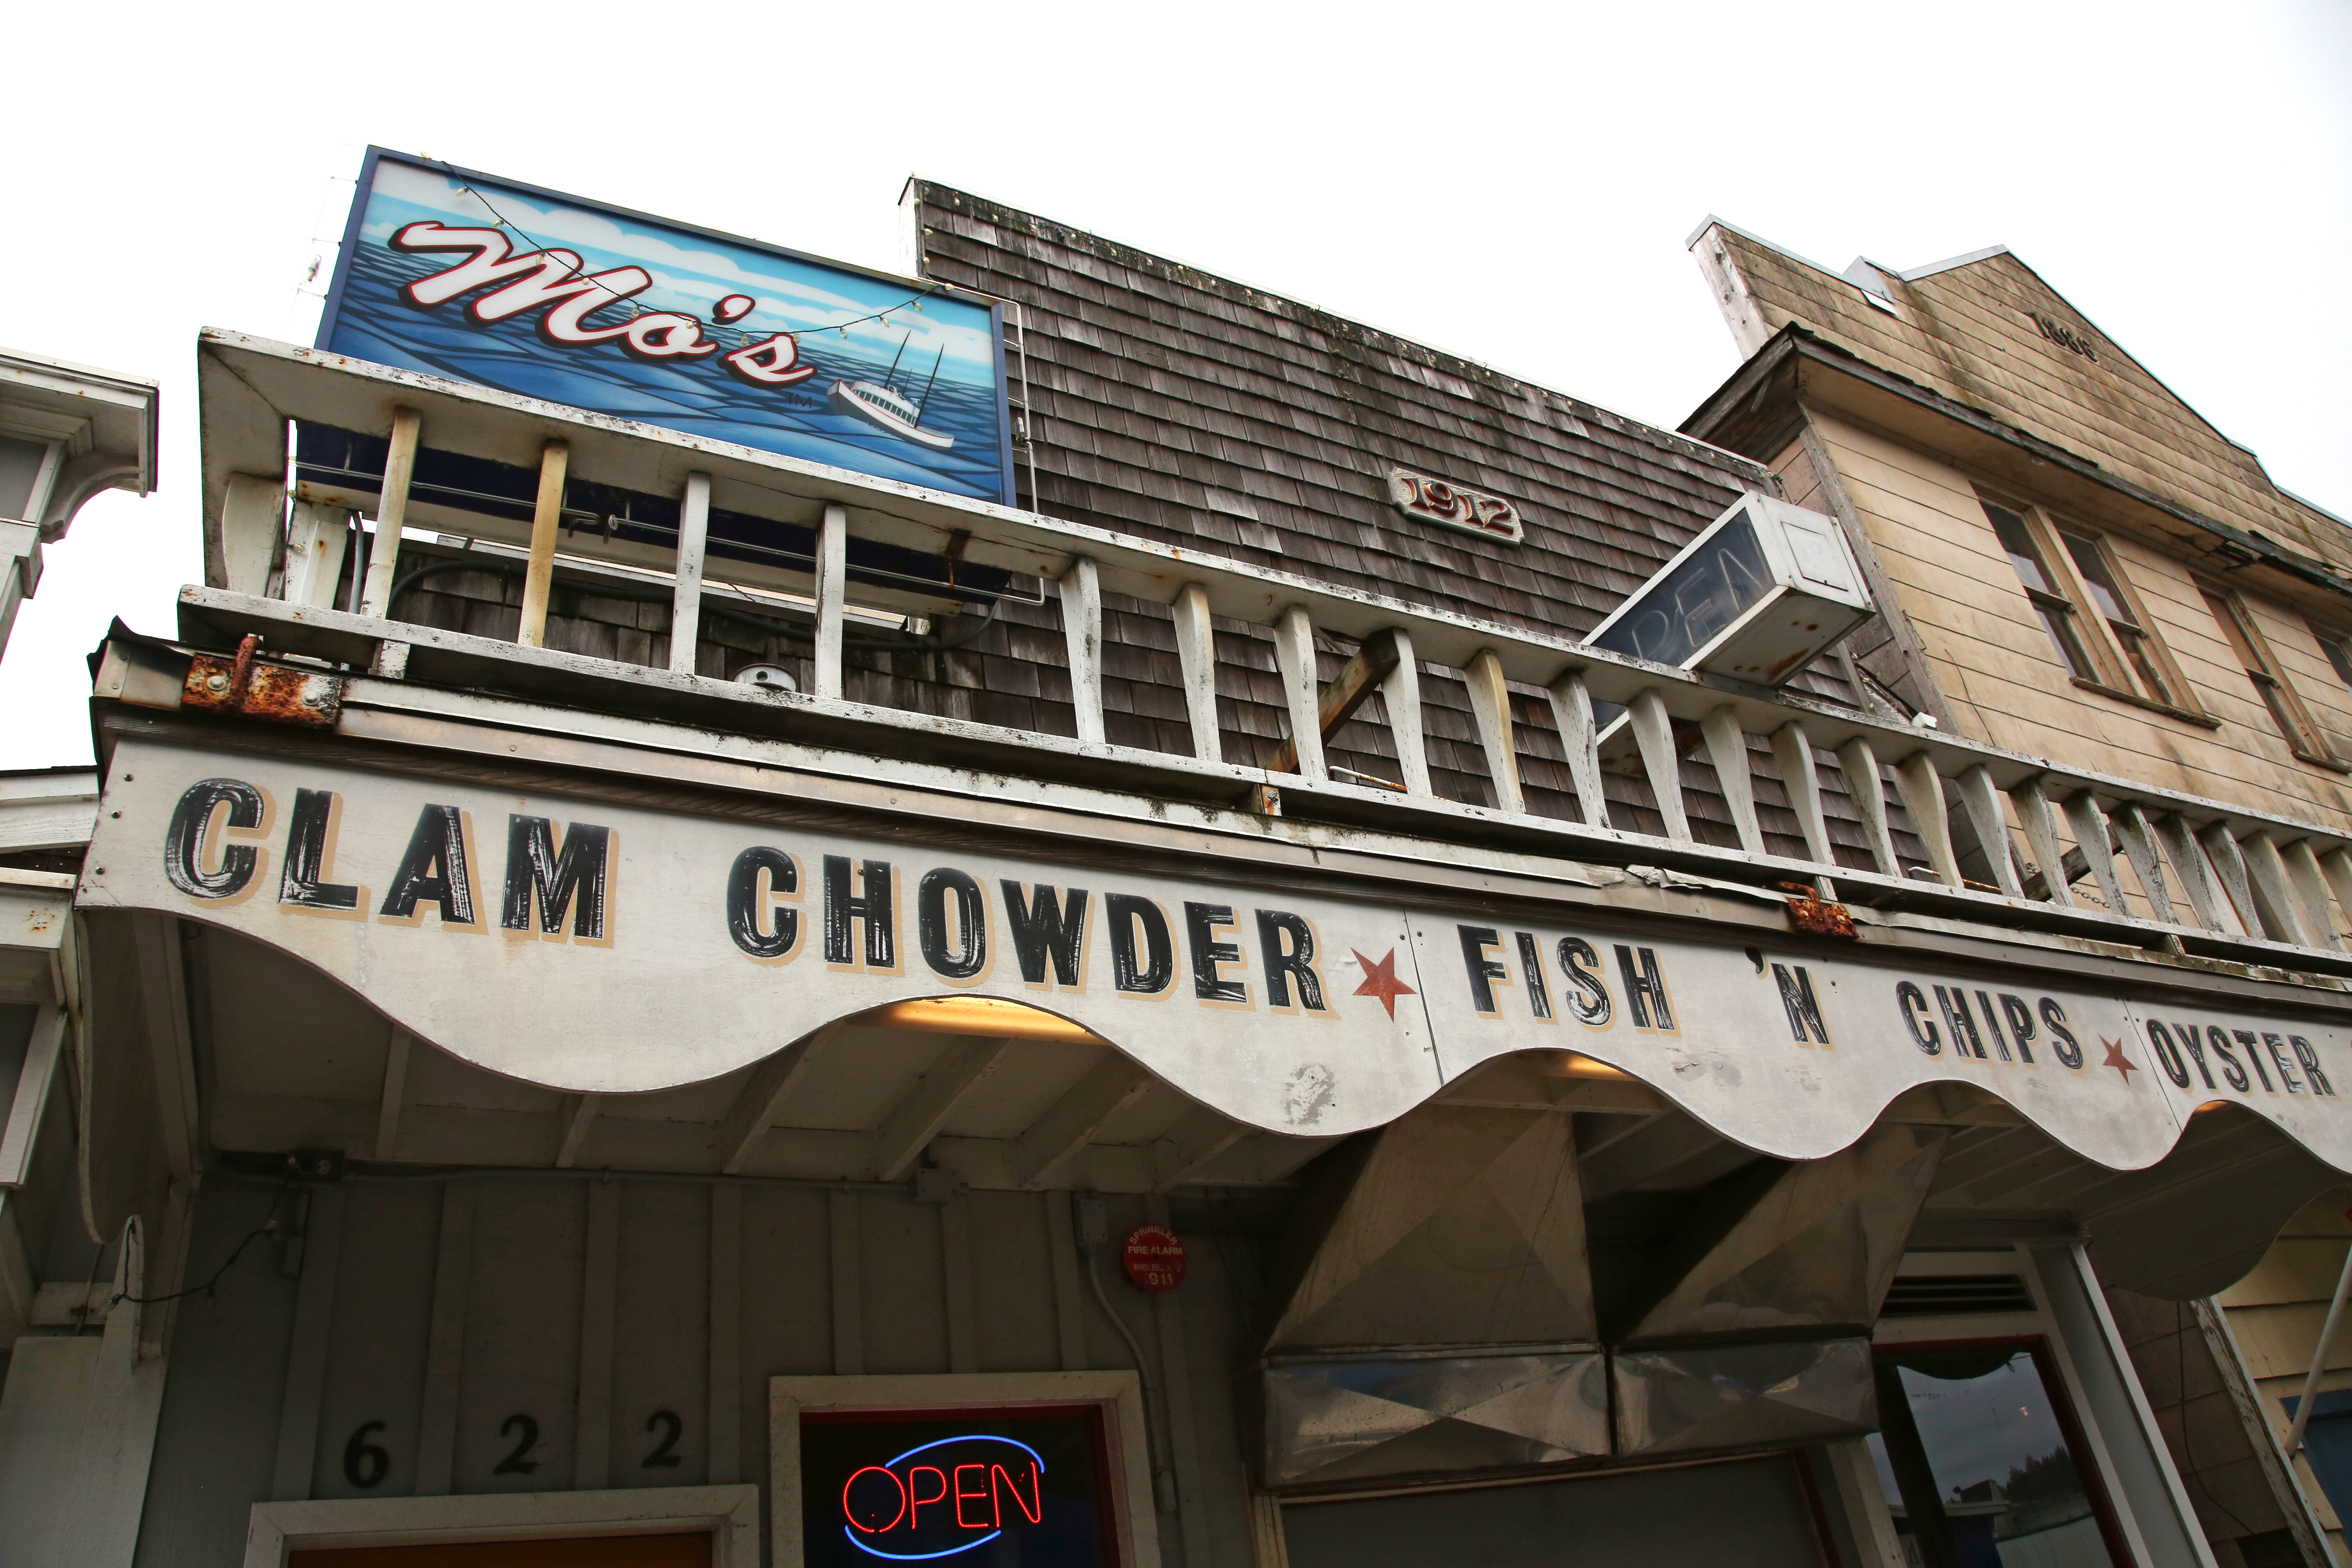 Places I LOVE - Mo's Seafood & Chowder - Newport, Oregon - Handrafted